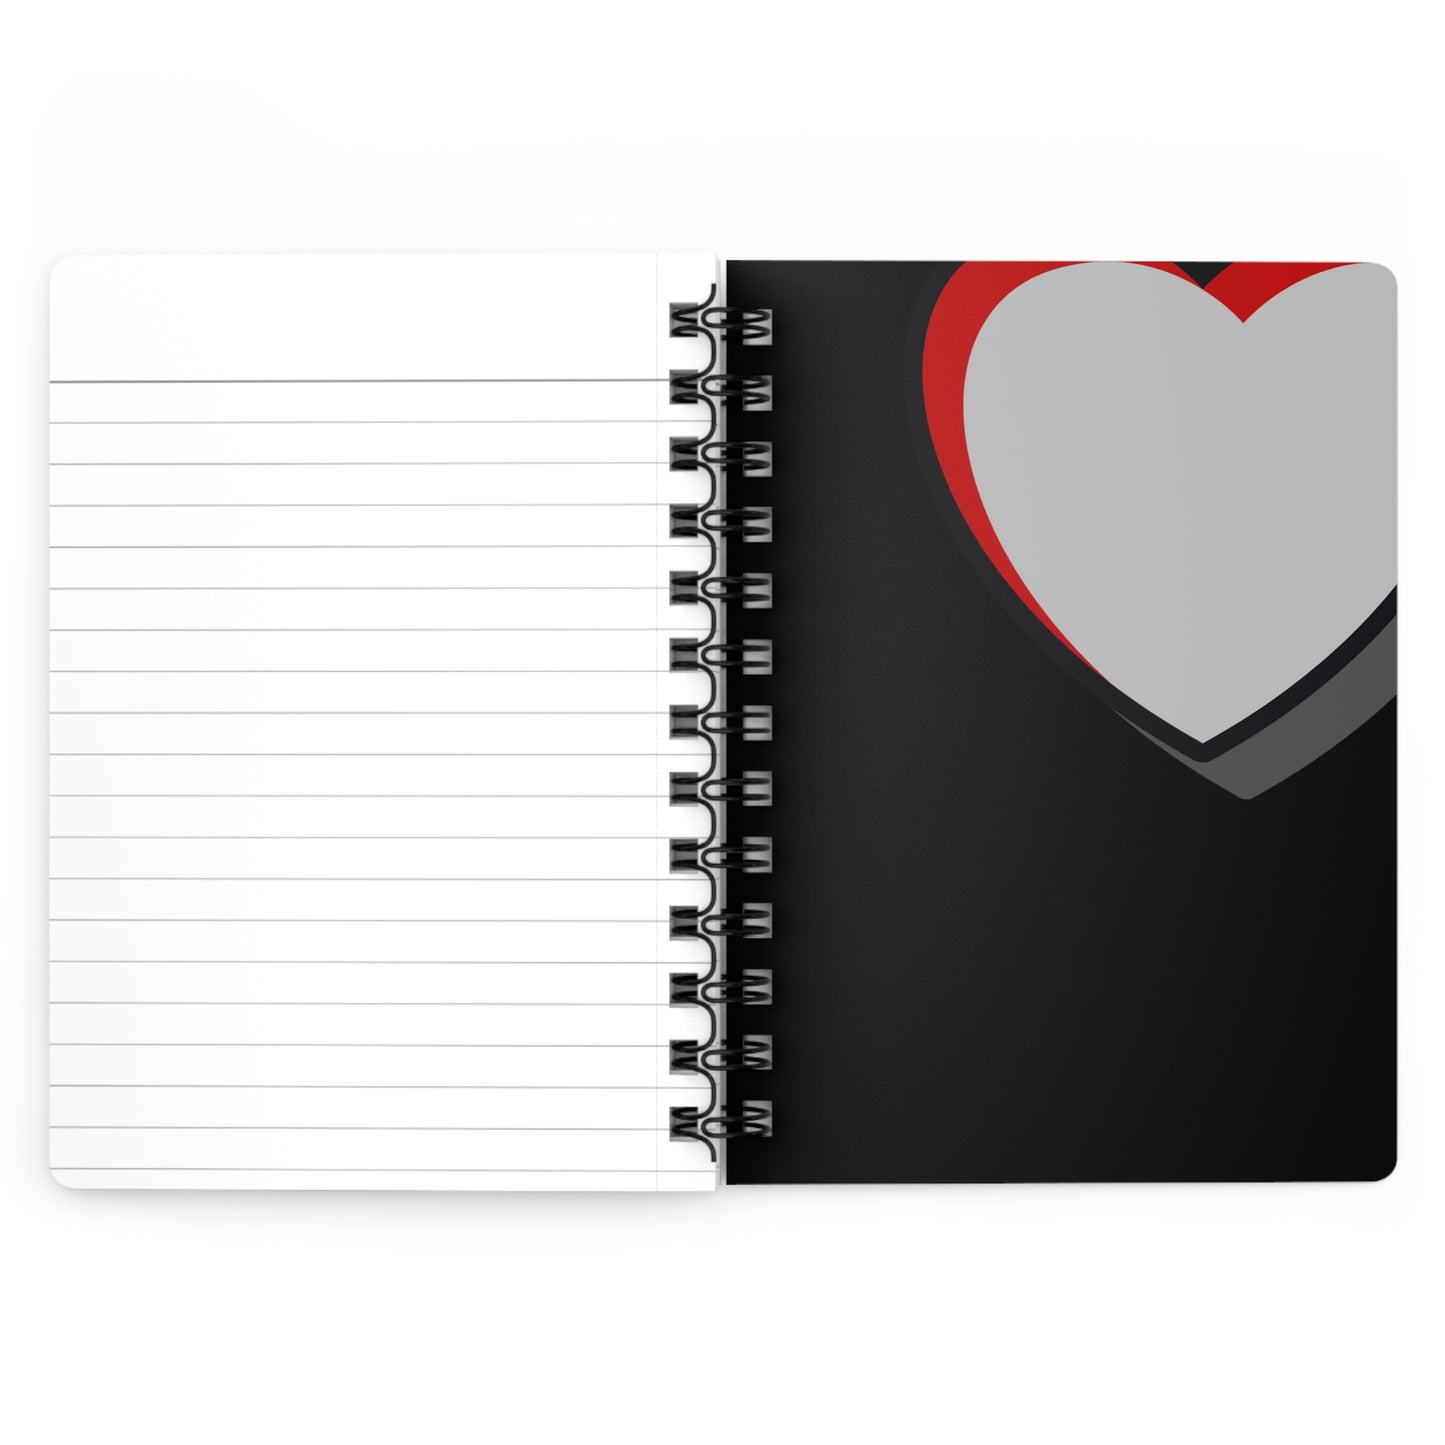 Heart 2 Heart Notebook, Black Colored Notebook, Black Notebook, Heart Design Notebook, Designer Notebook, College Student Notebook, School Notebook, Spiral Bound Journal